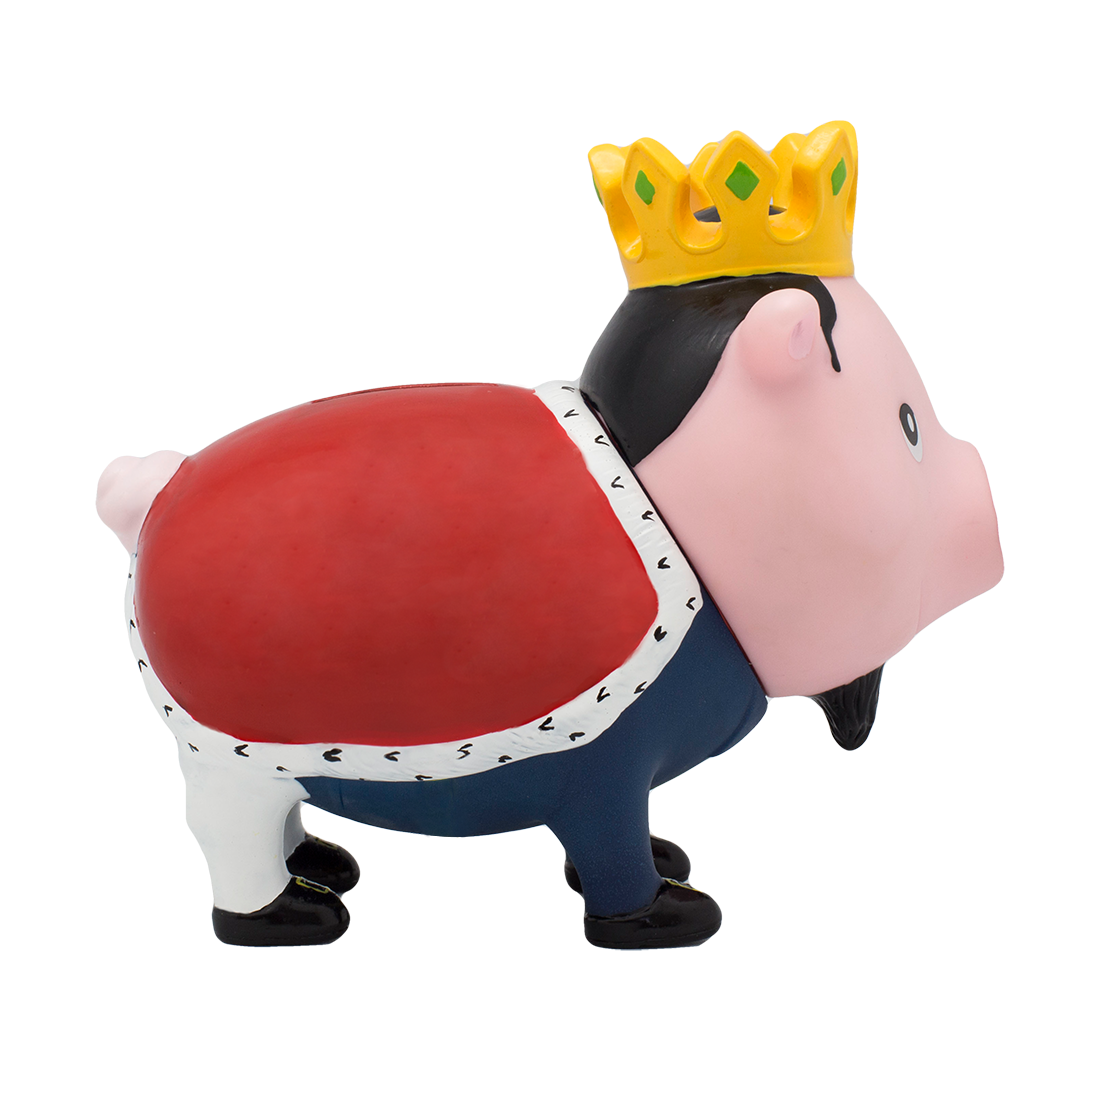 rey cerdo